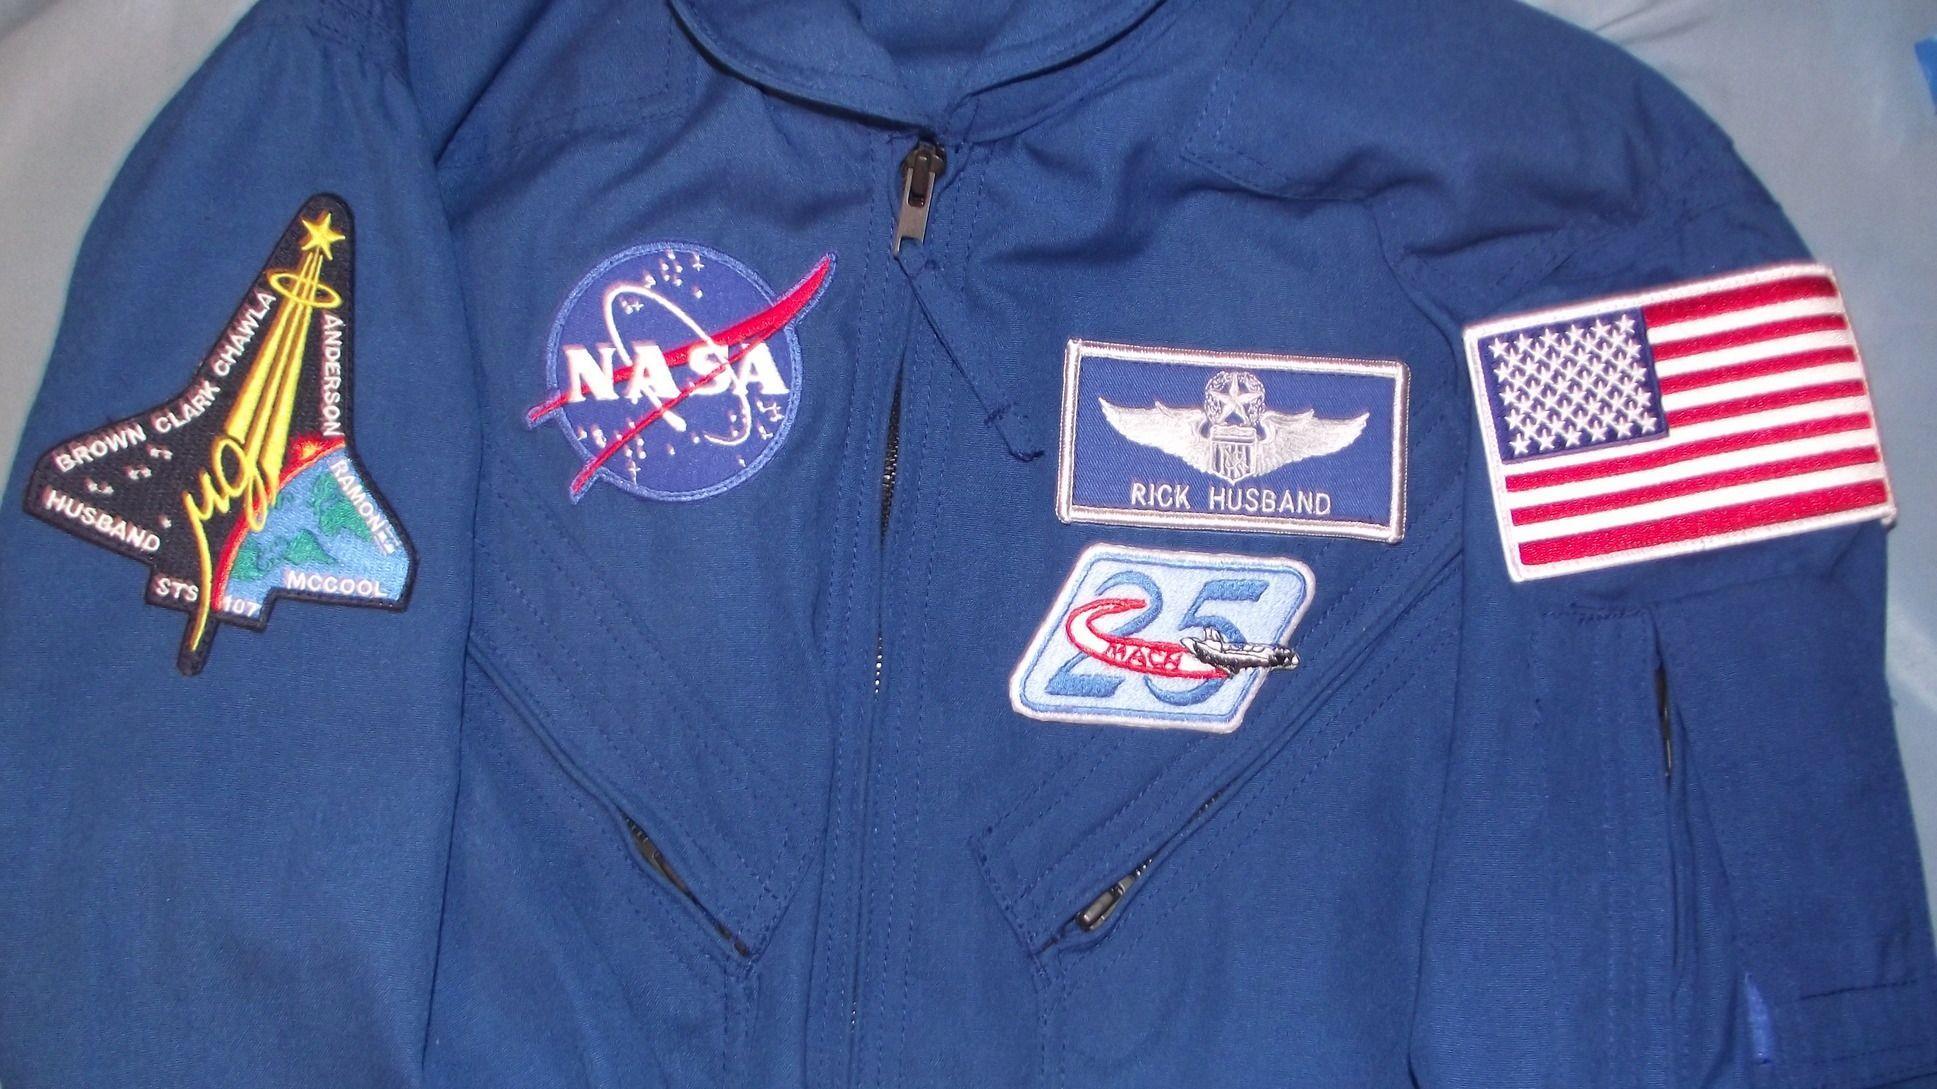 NASA Flight Suit Logo - nasa space flight suit logo patches